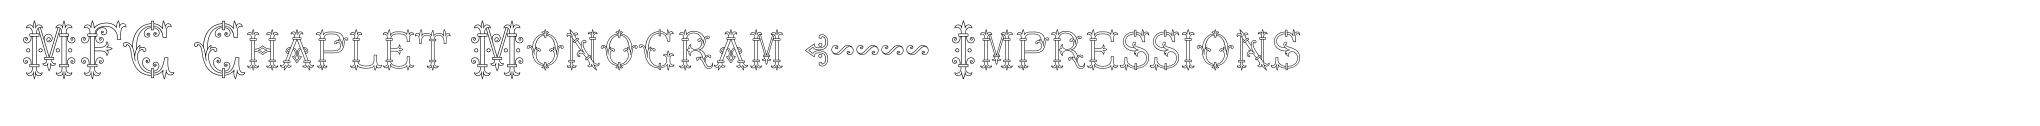 MFC Chaplet Monogram 10000 Impressions image